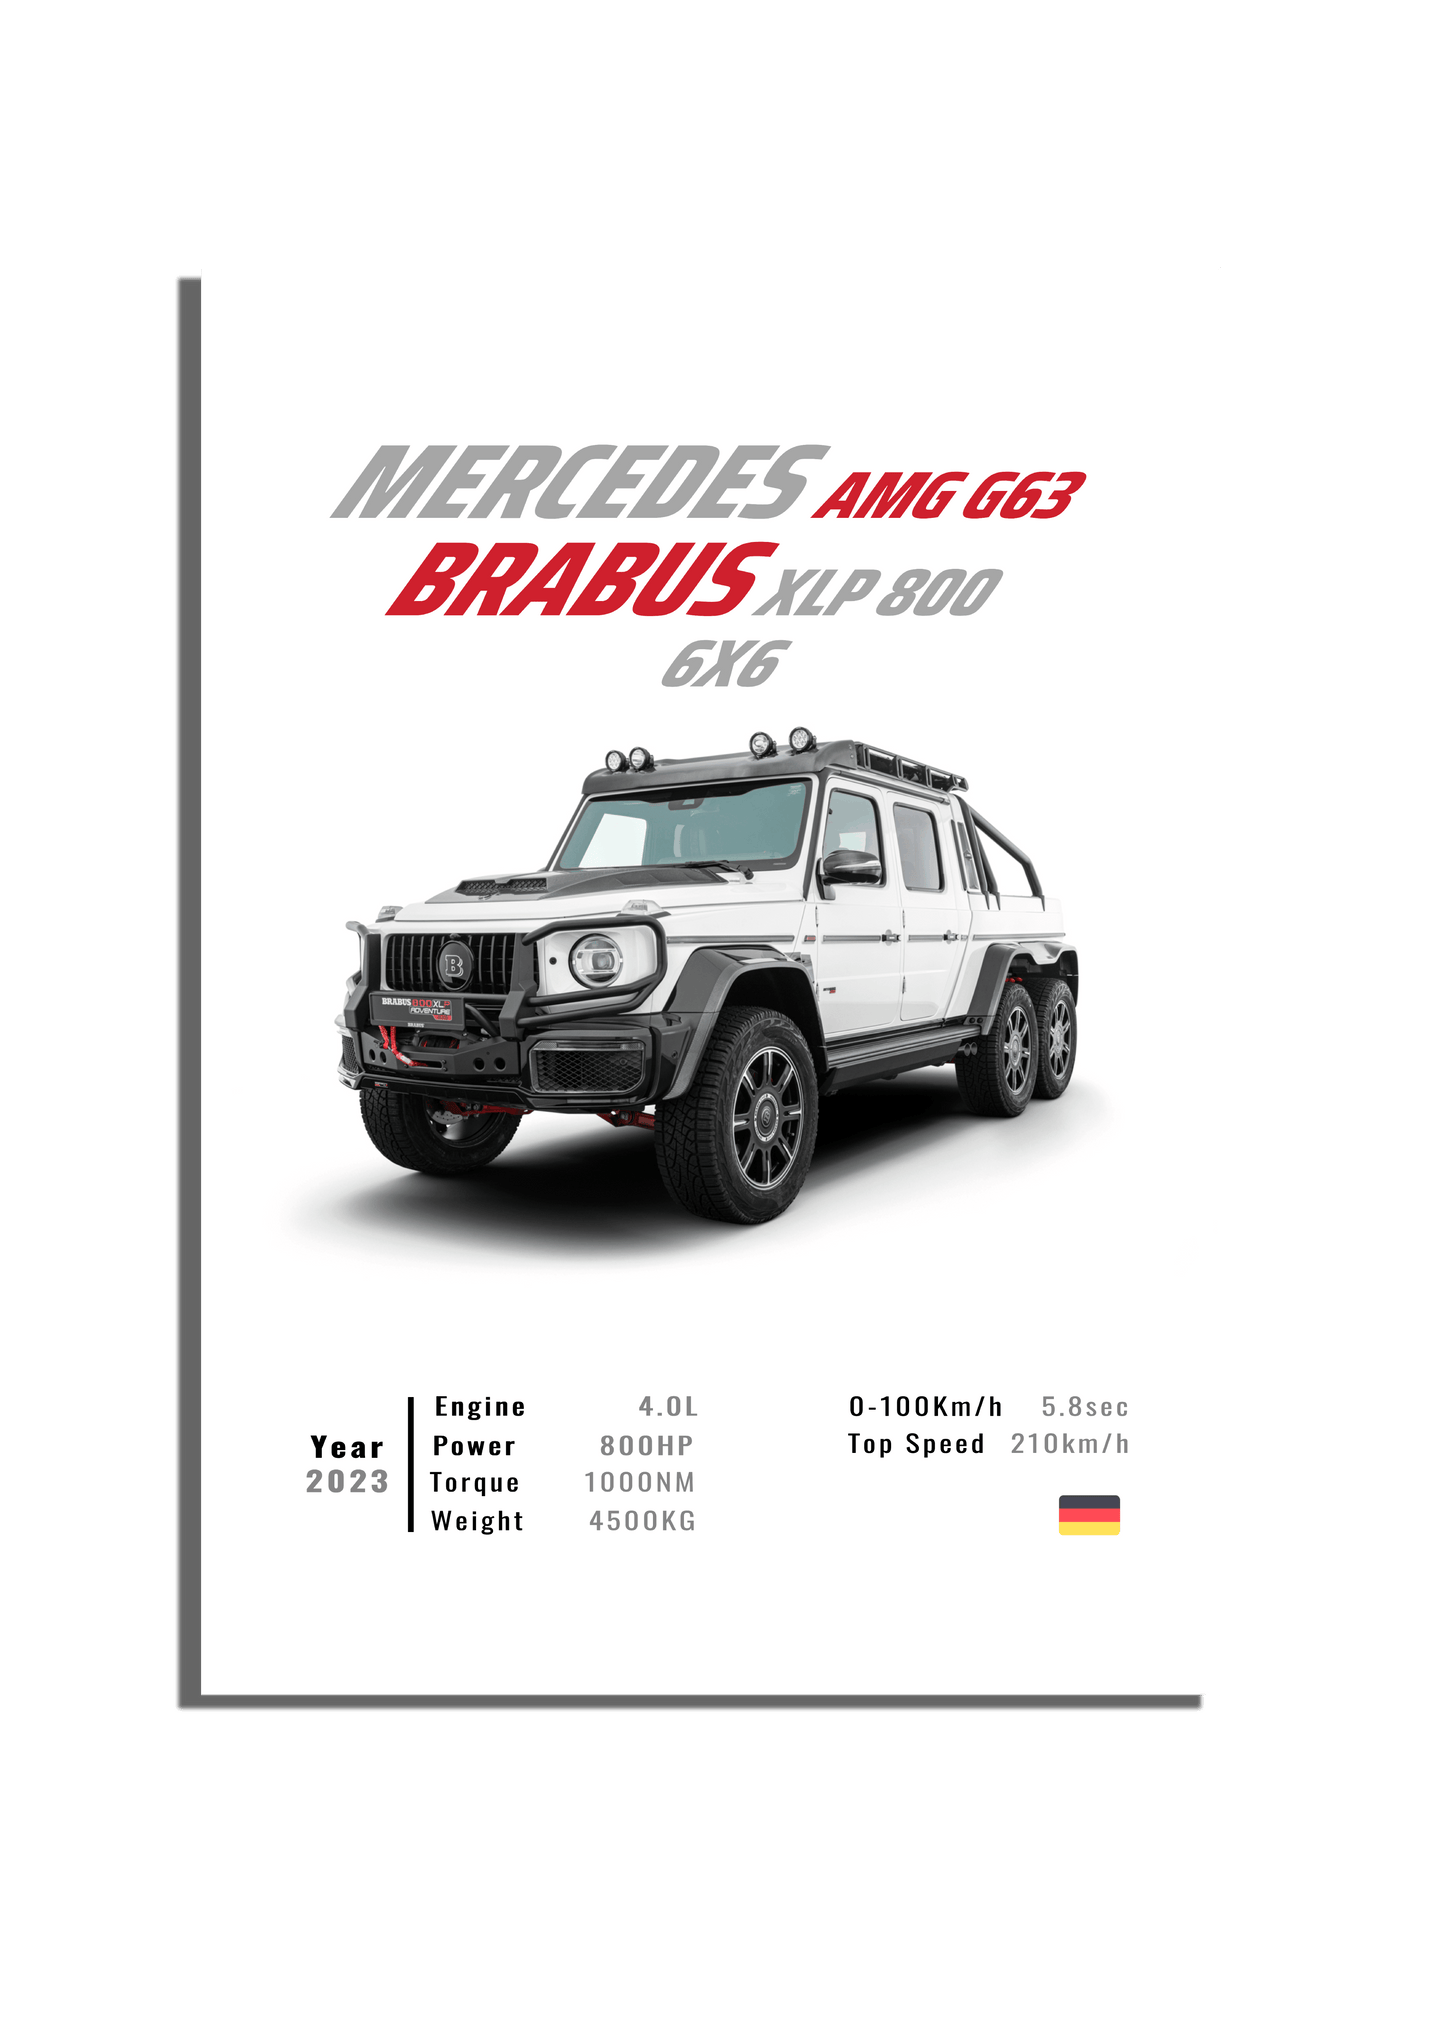 MERCEDES AMG G63 BRABUS XLP 800 6X6